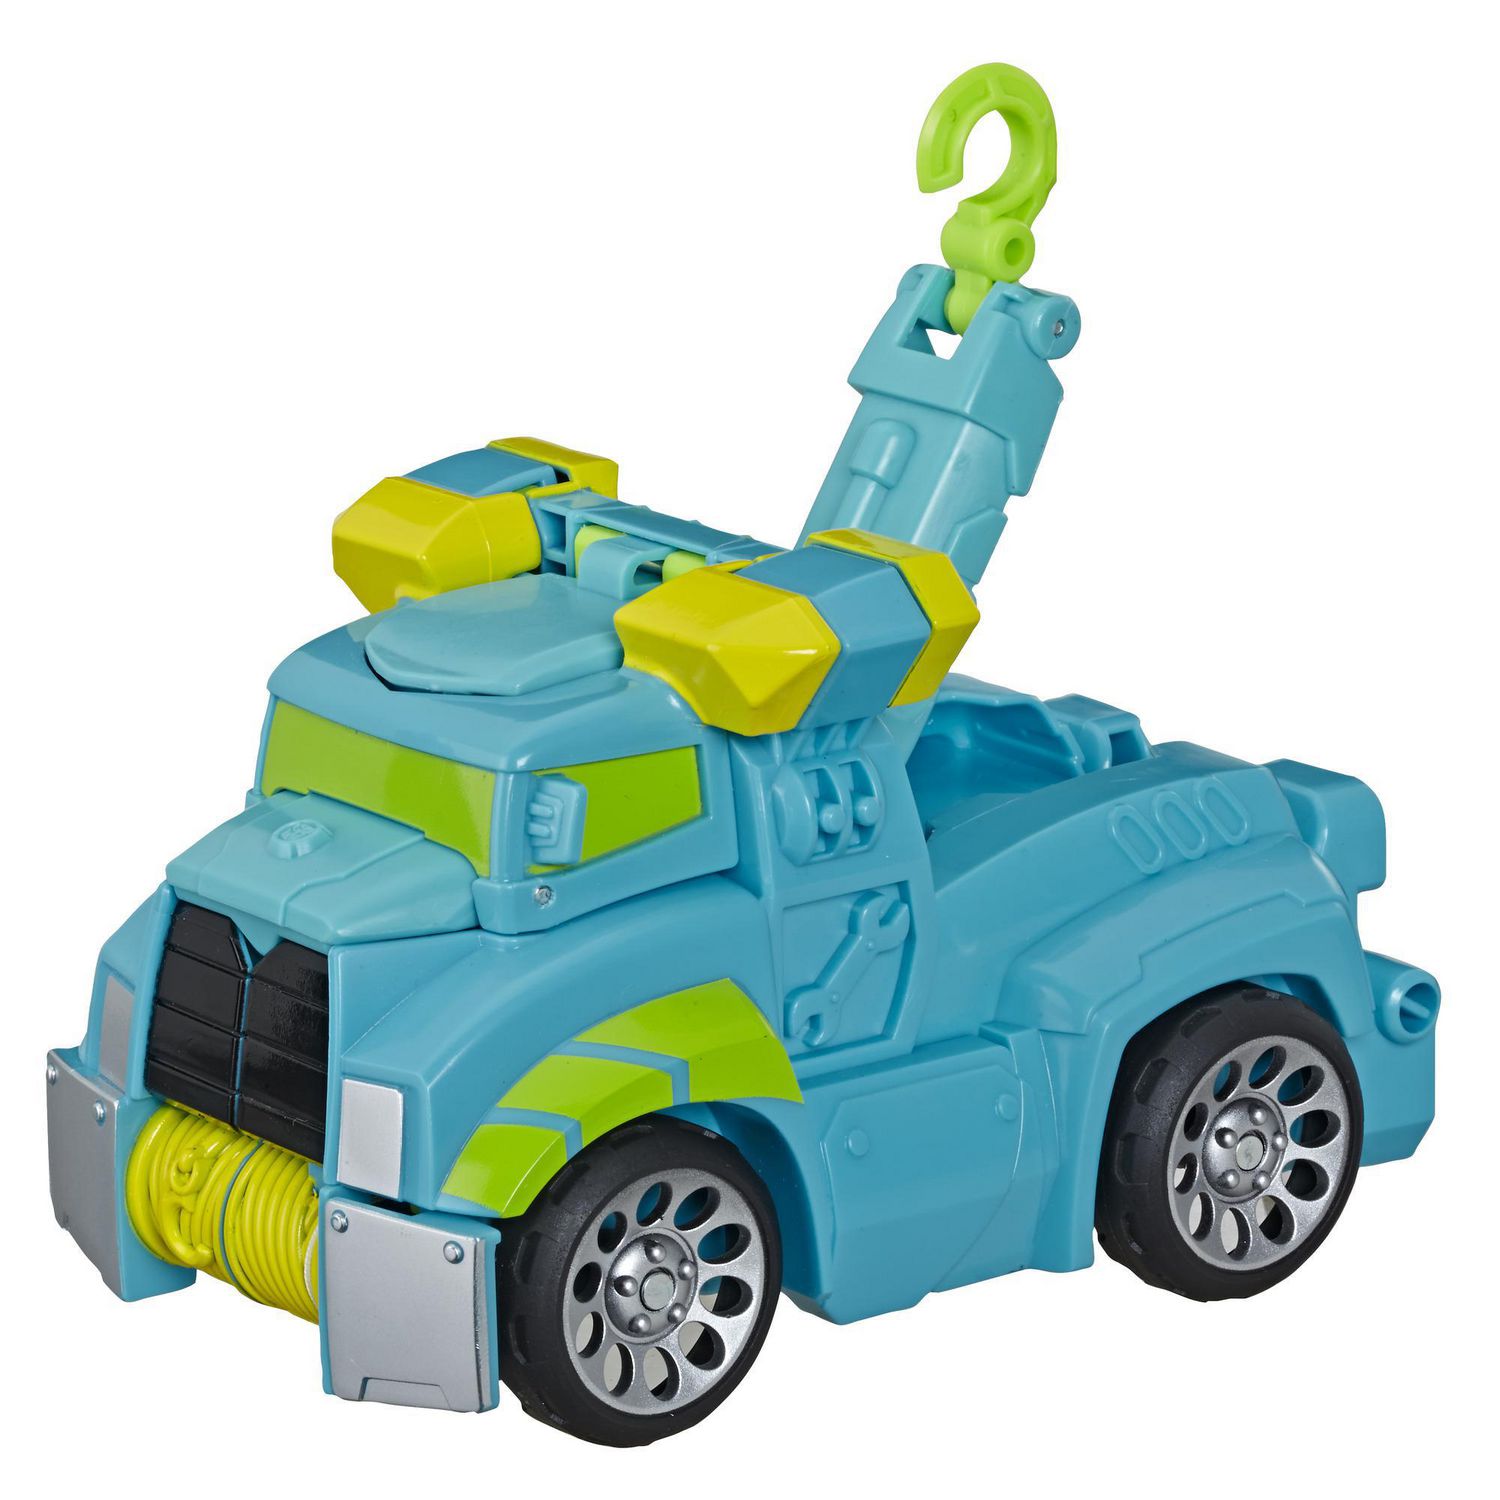 Playskool Heroes Transformers Rescue Bots Academy Hoist Converting